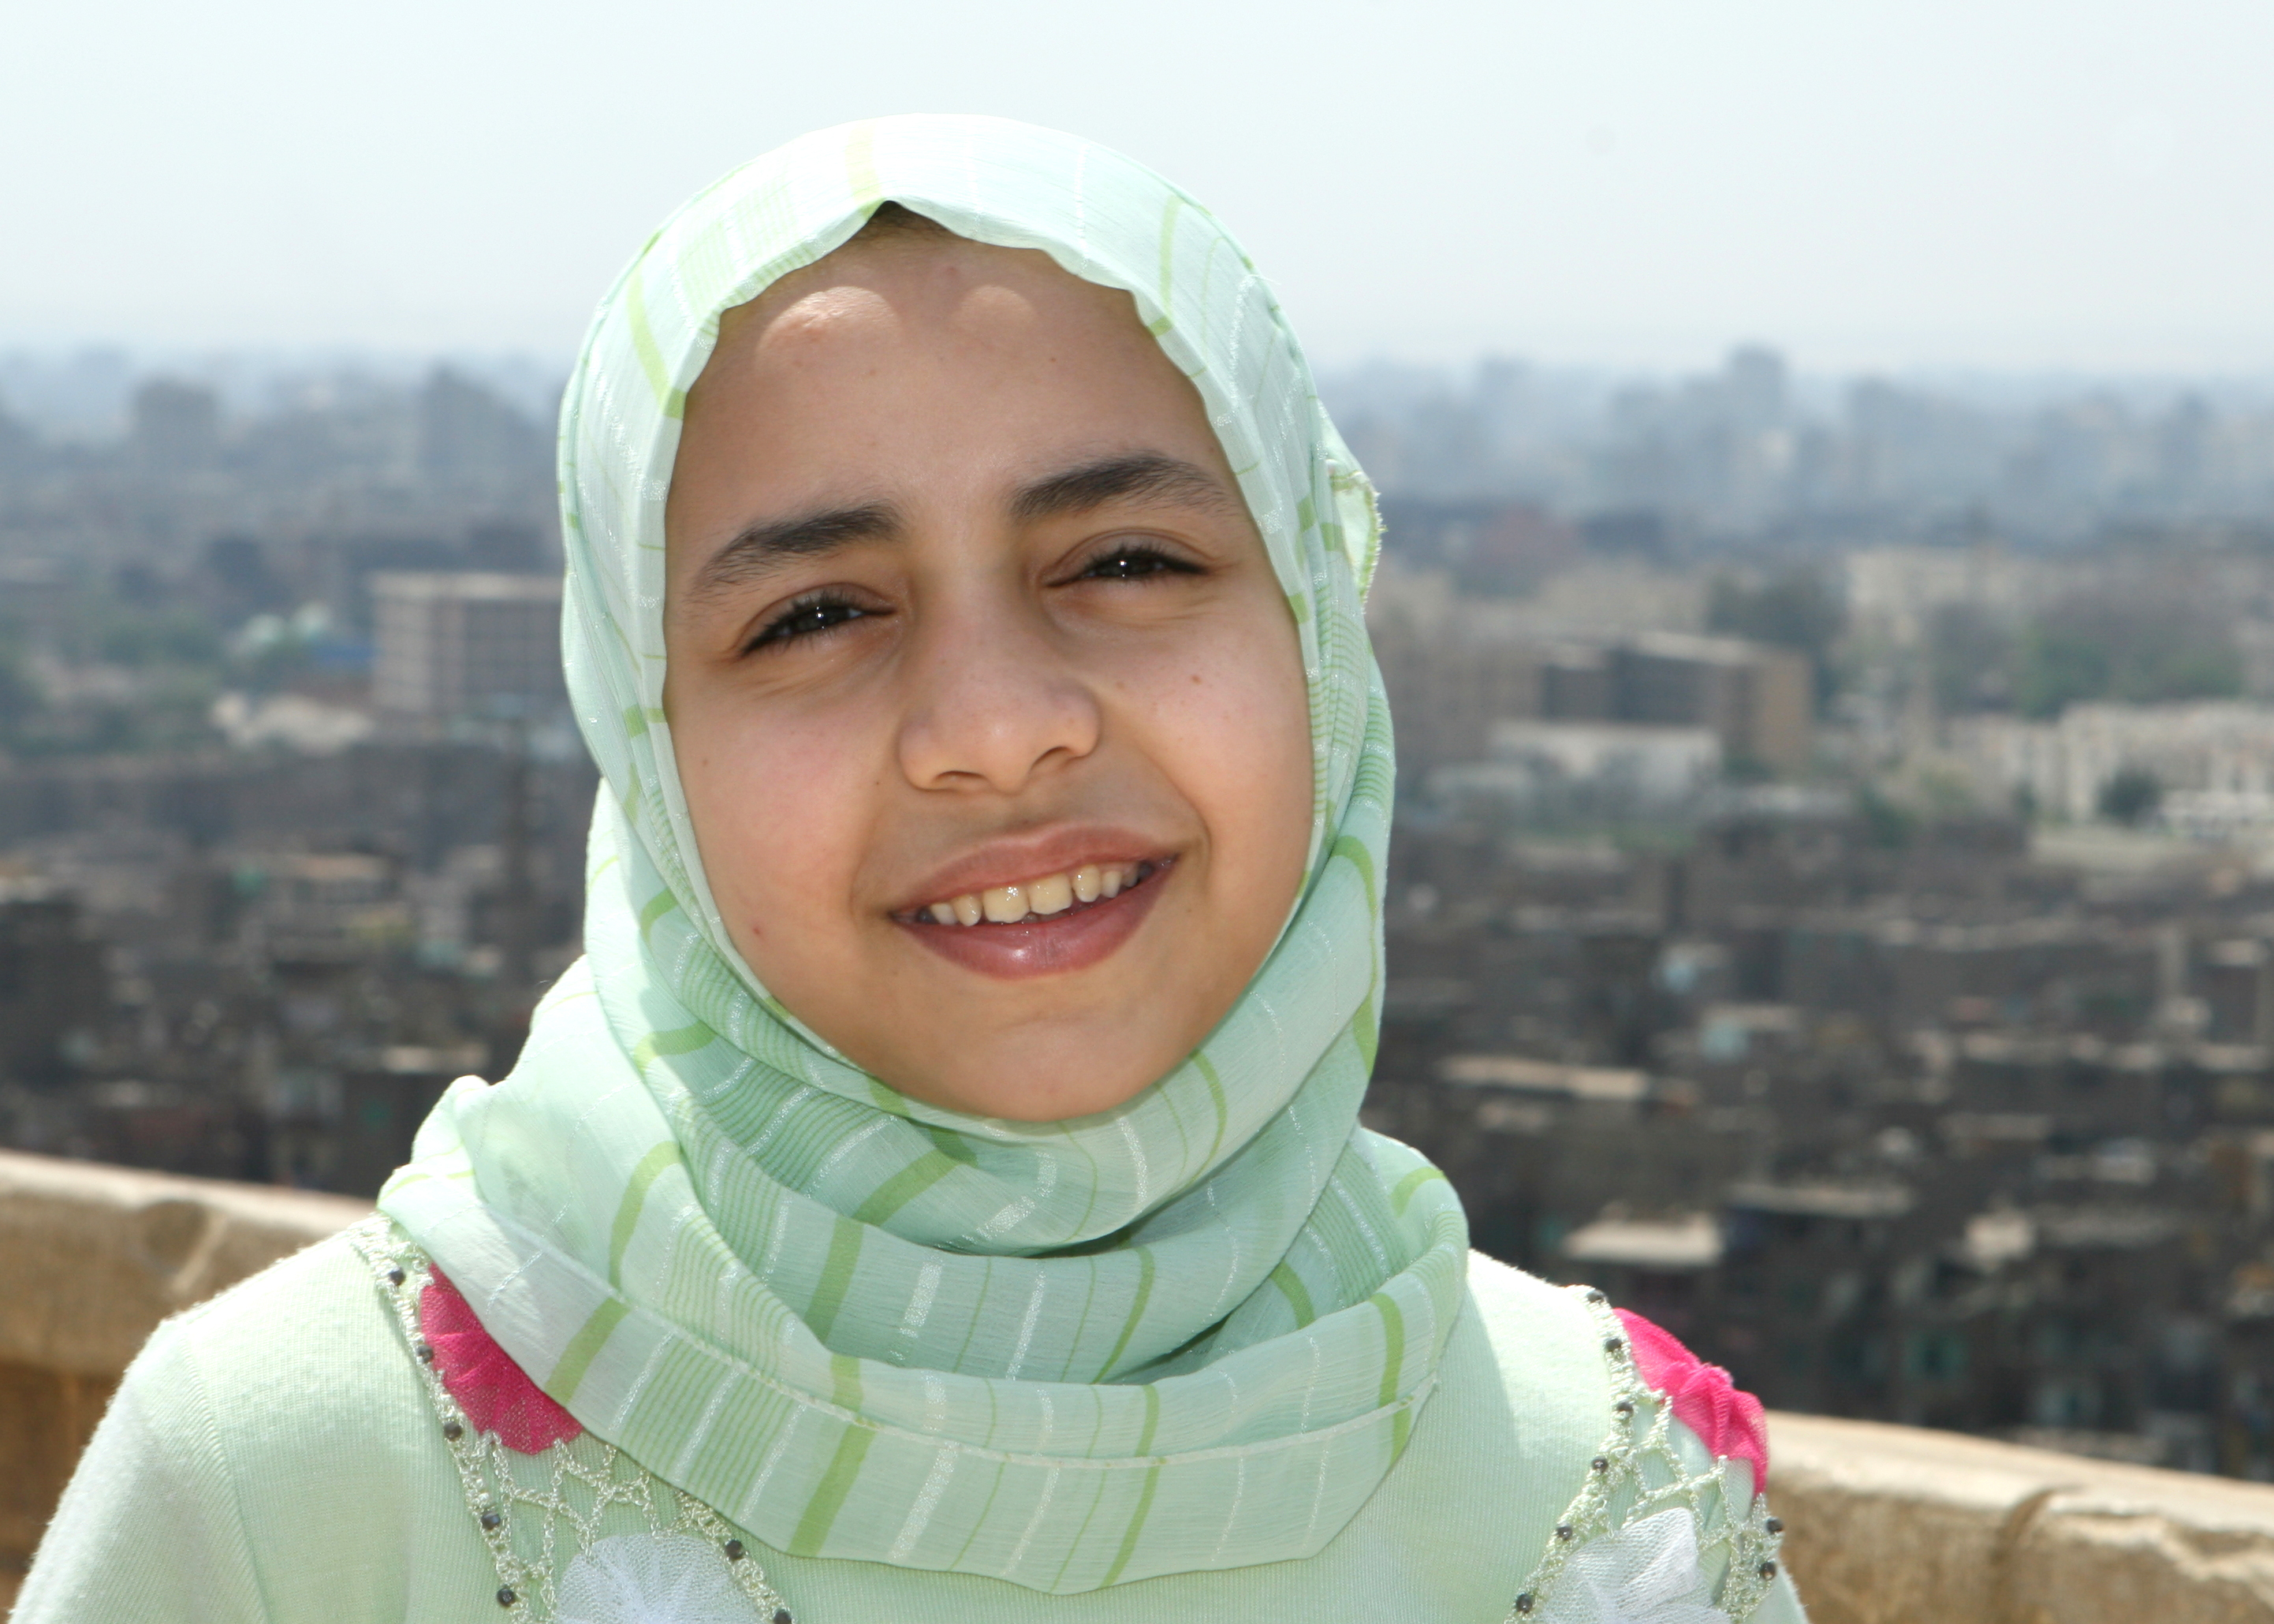 Flickr - DavidDennisPhotos.com - Girl at Mohamed Ali Mosque overlooking Cairo